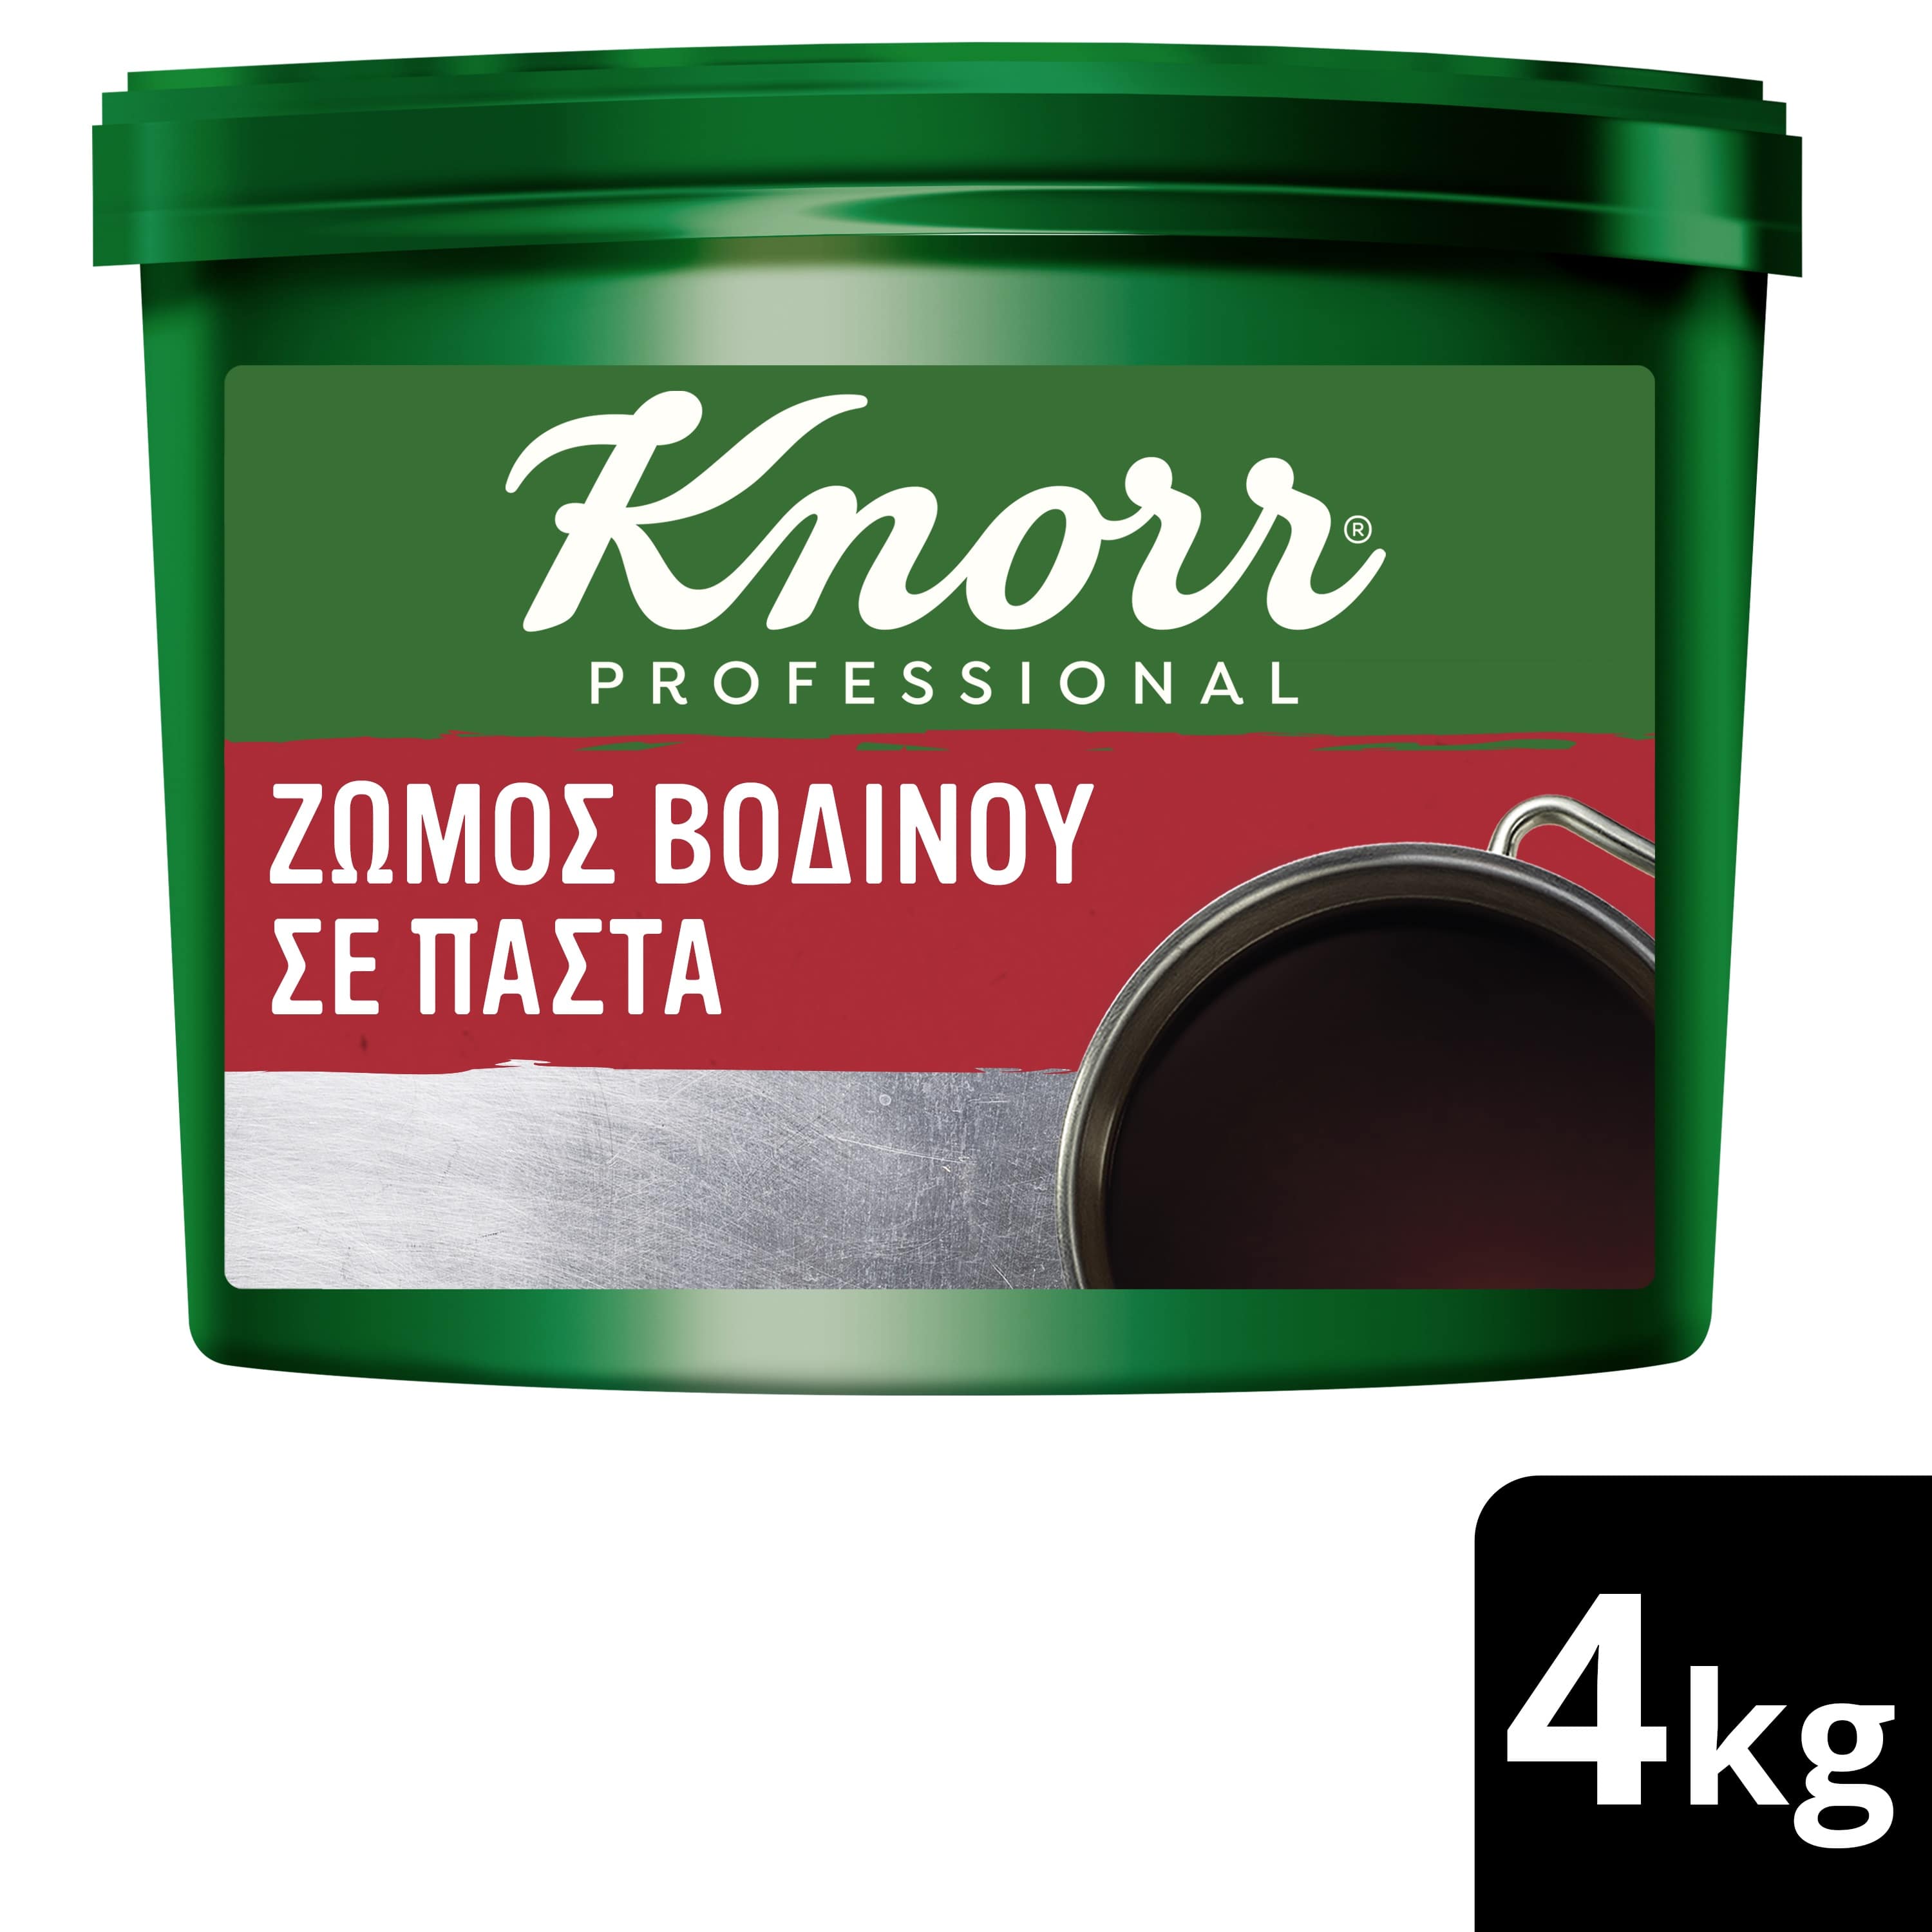 Knorr Ζωμός Βοδινού σε Πάστα 4 kg - 